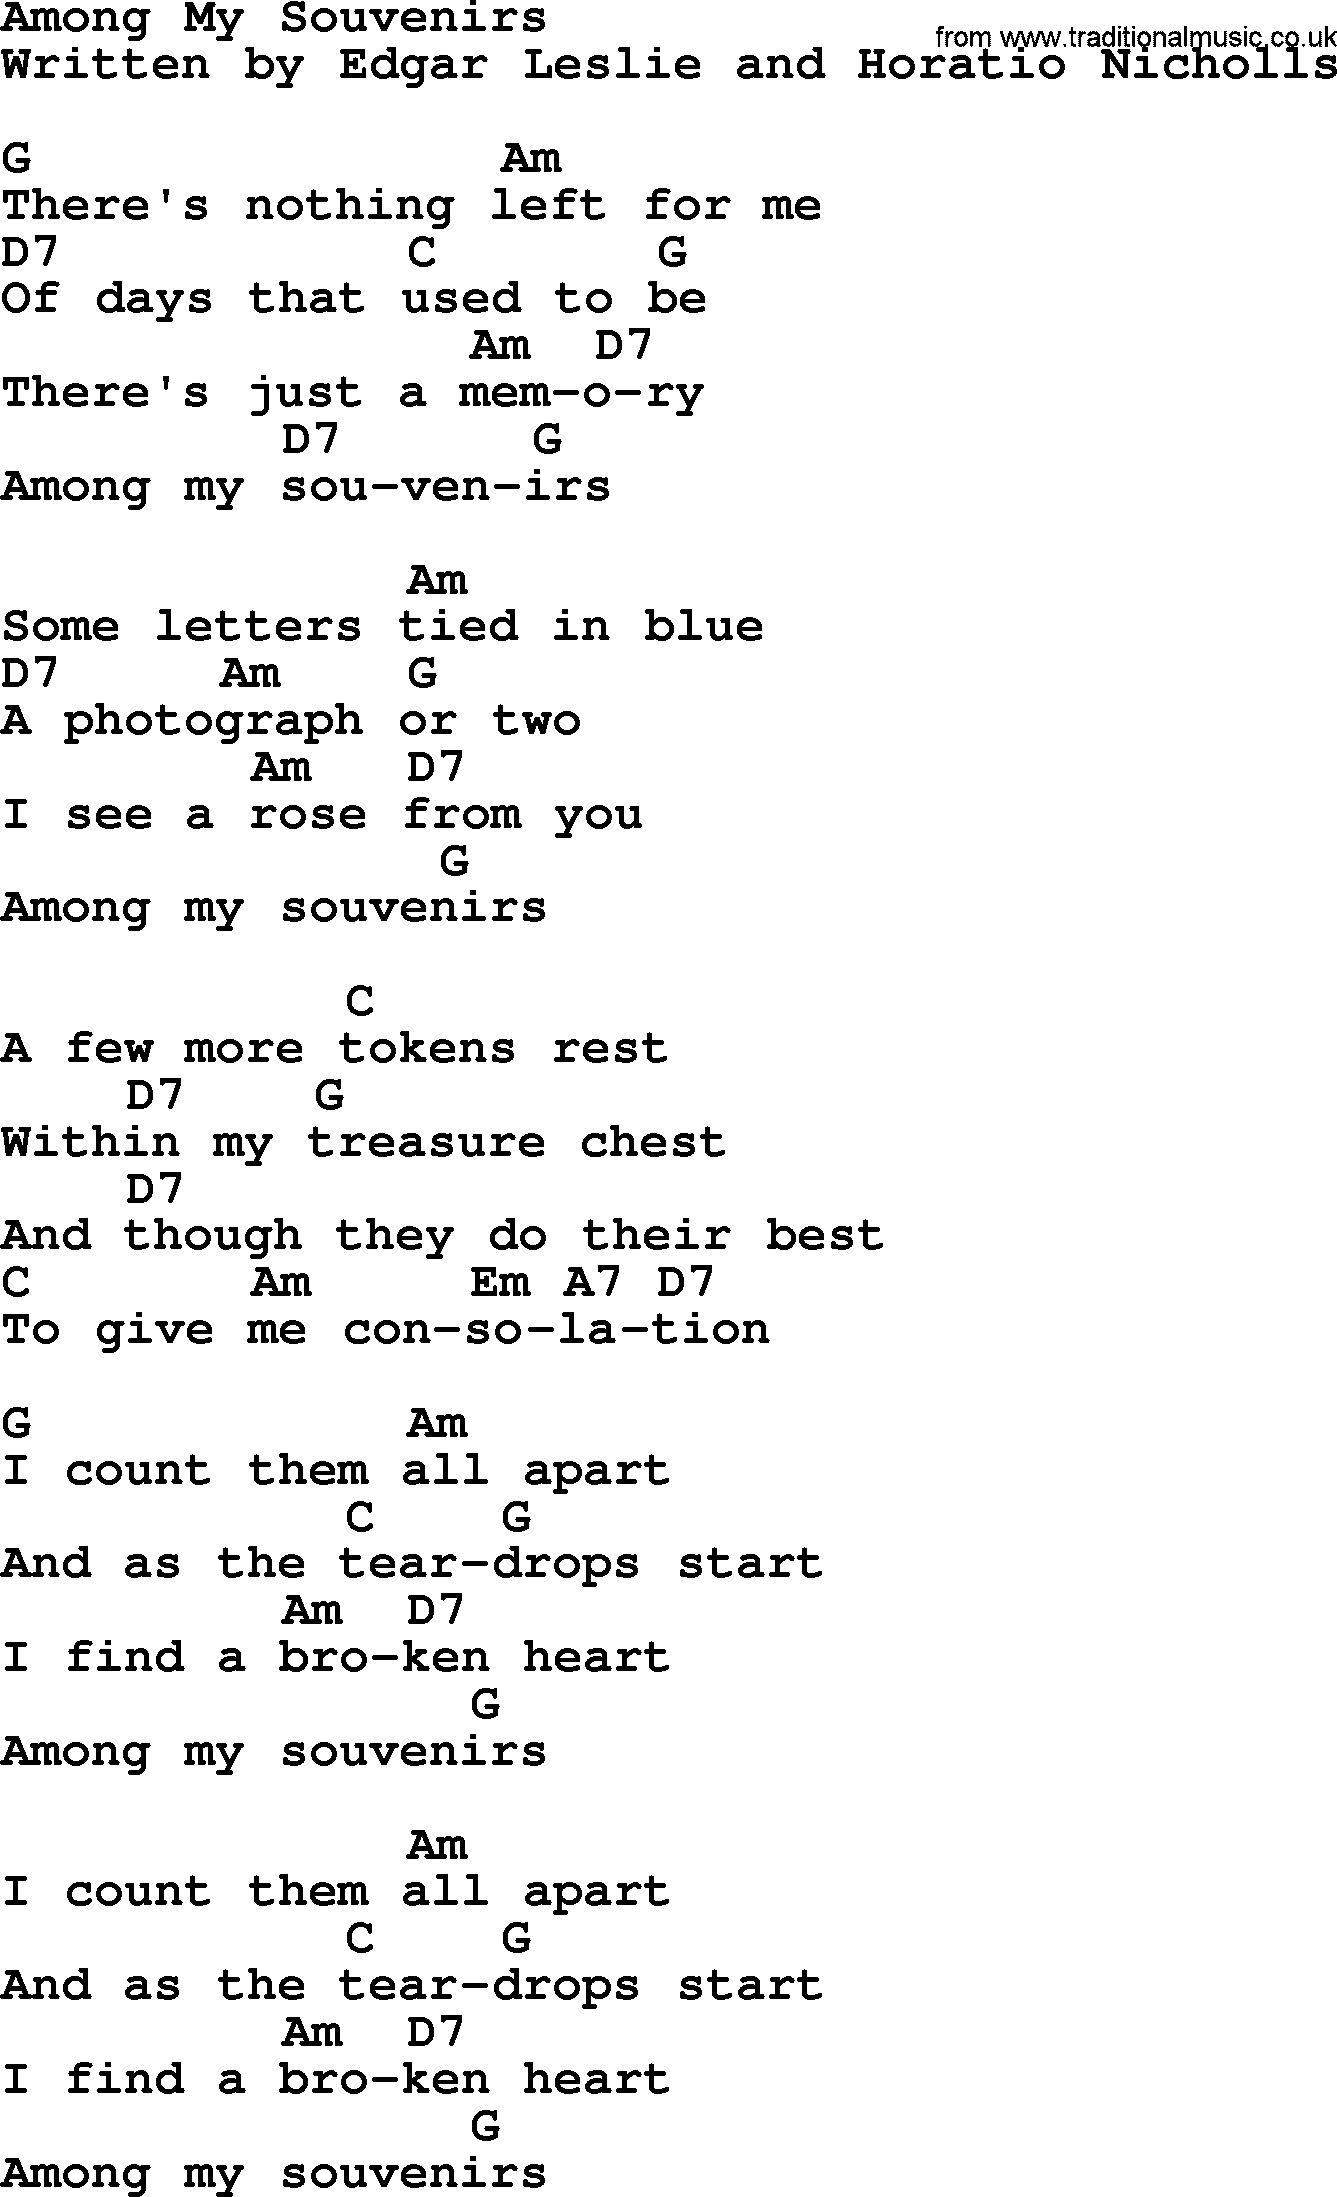 Marty Robbins song: Among My Souvenirs, lyrics and chords